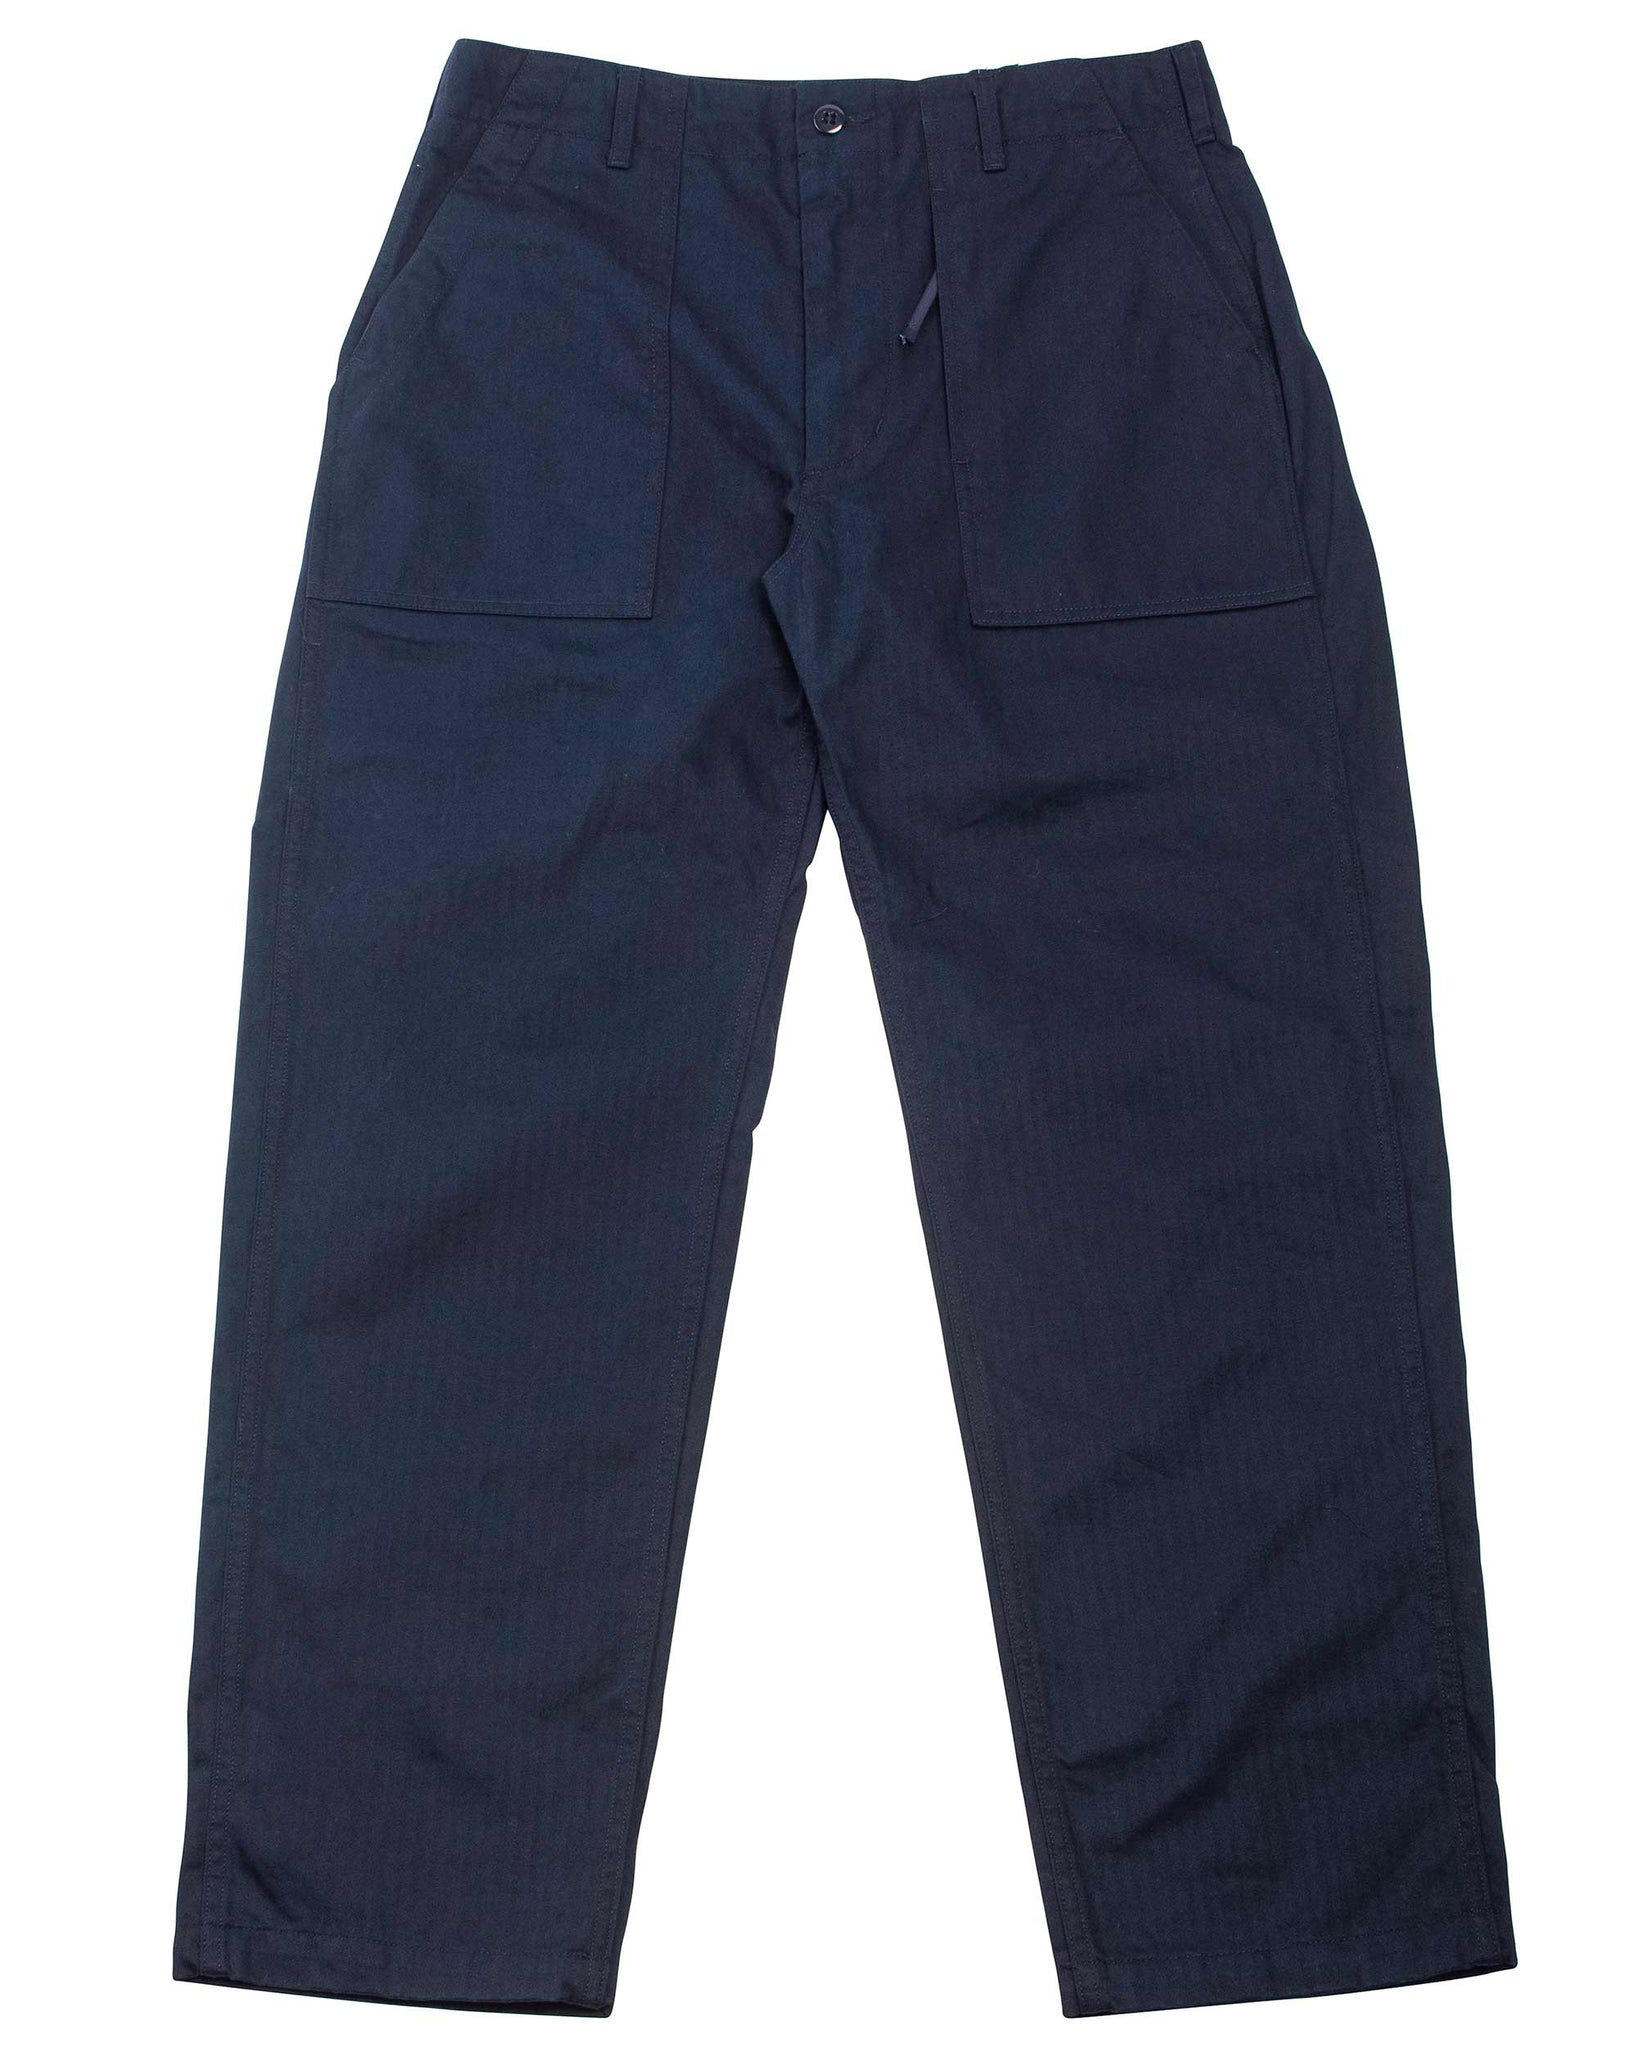 Engineered Garments Fatigue Pant Dark Navy Cotton Herringbone Twill